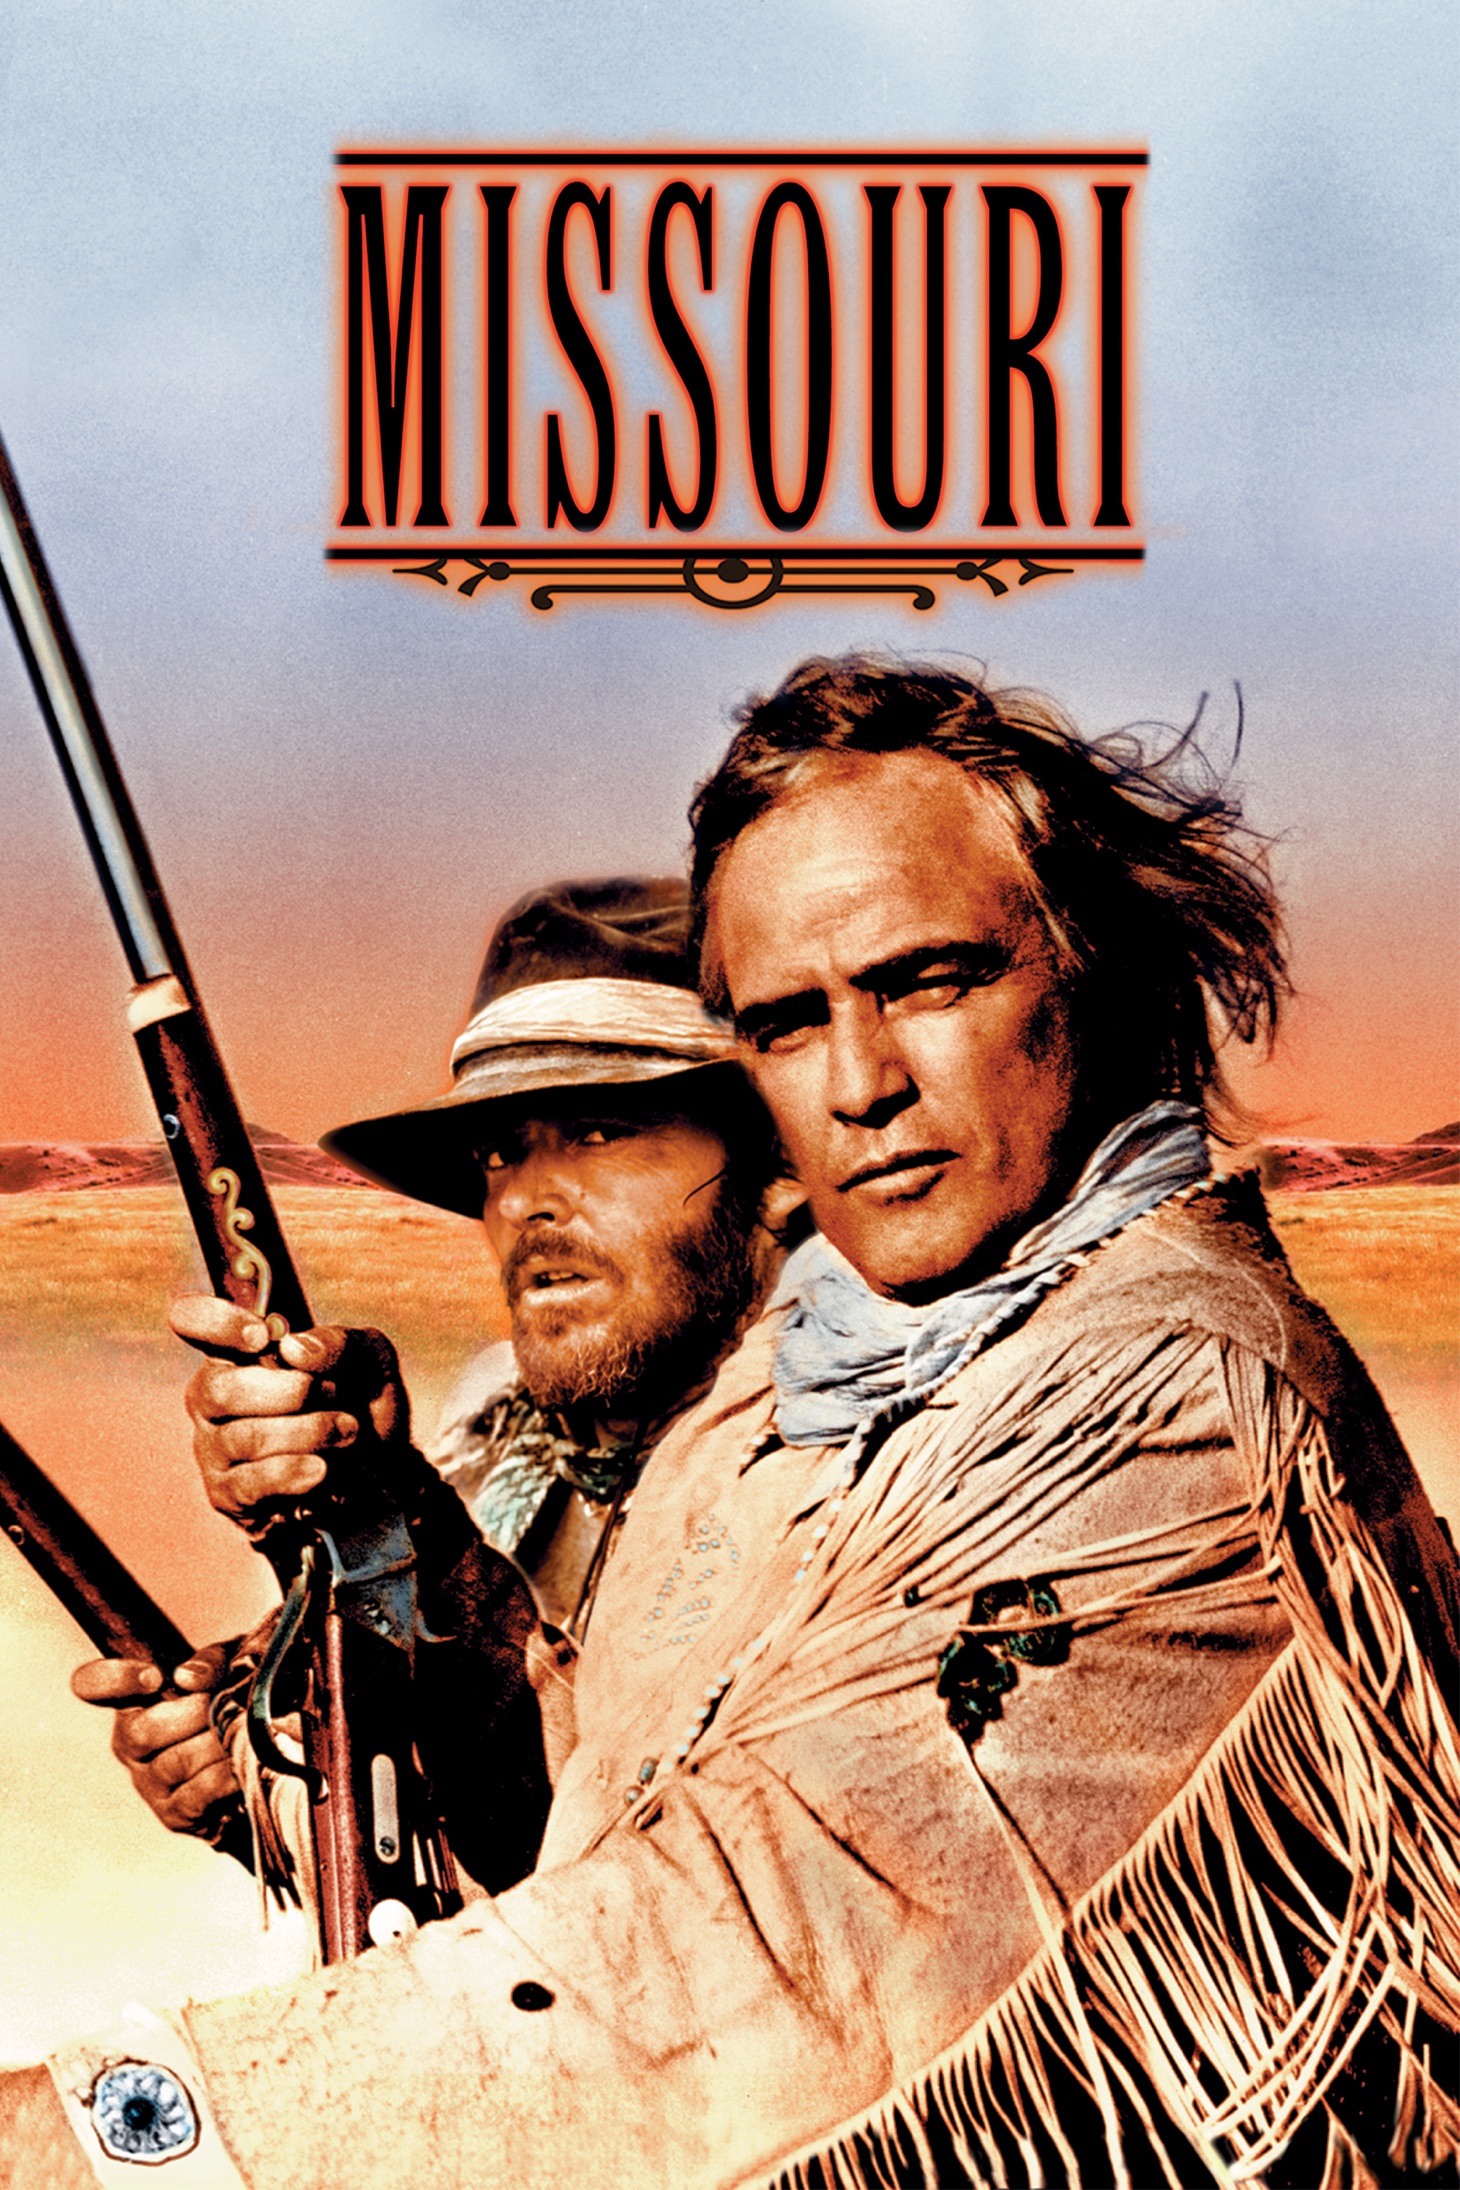 Missouri (1976)